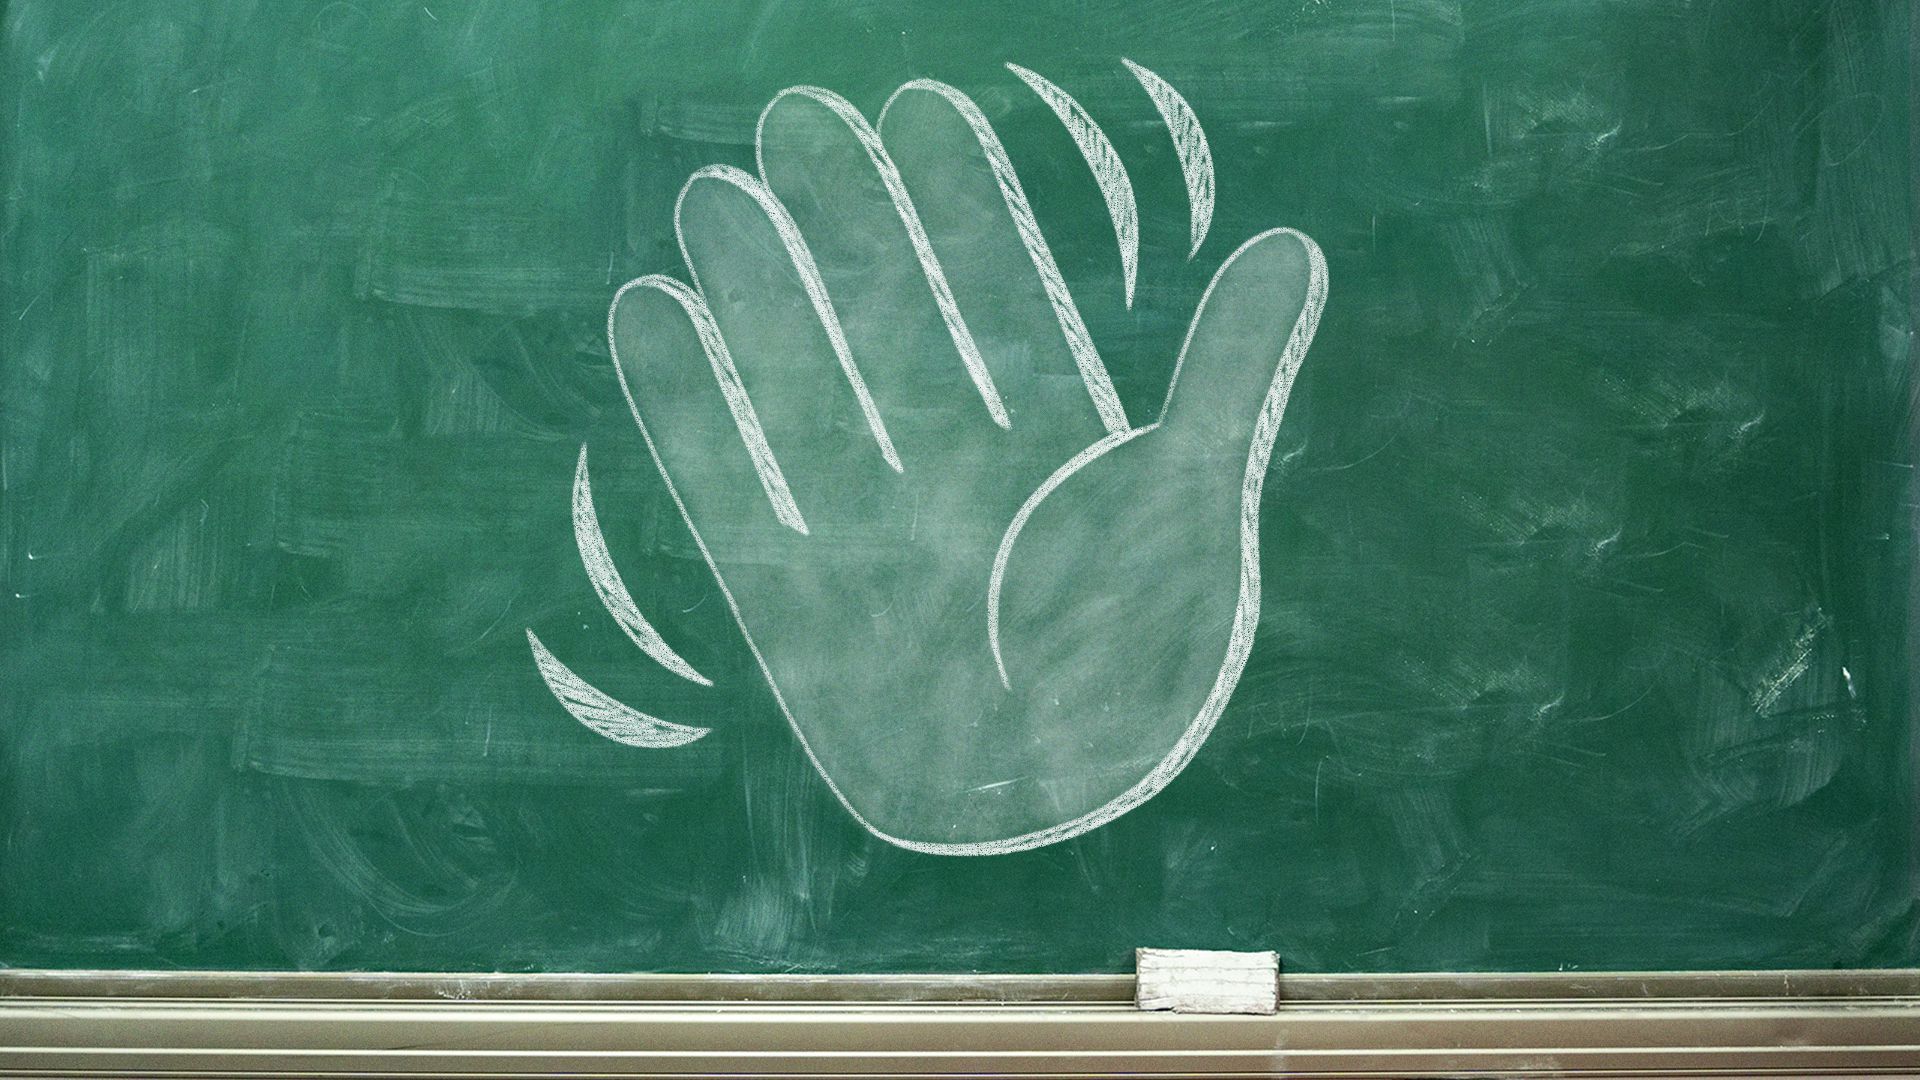 Illustration of a chalkboard with a waving hand emoji drawn on it.